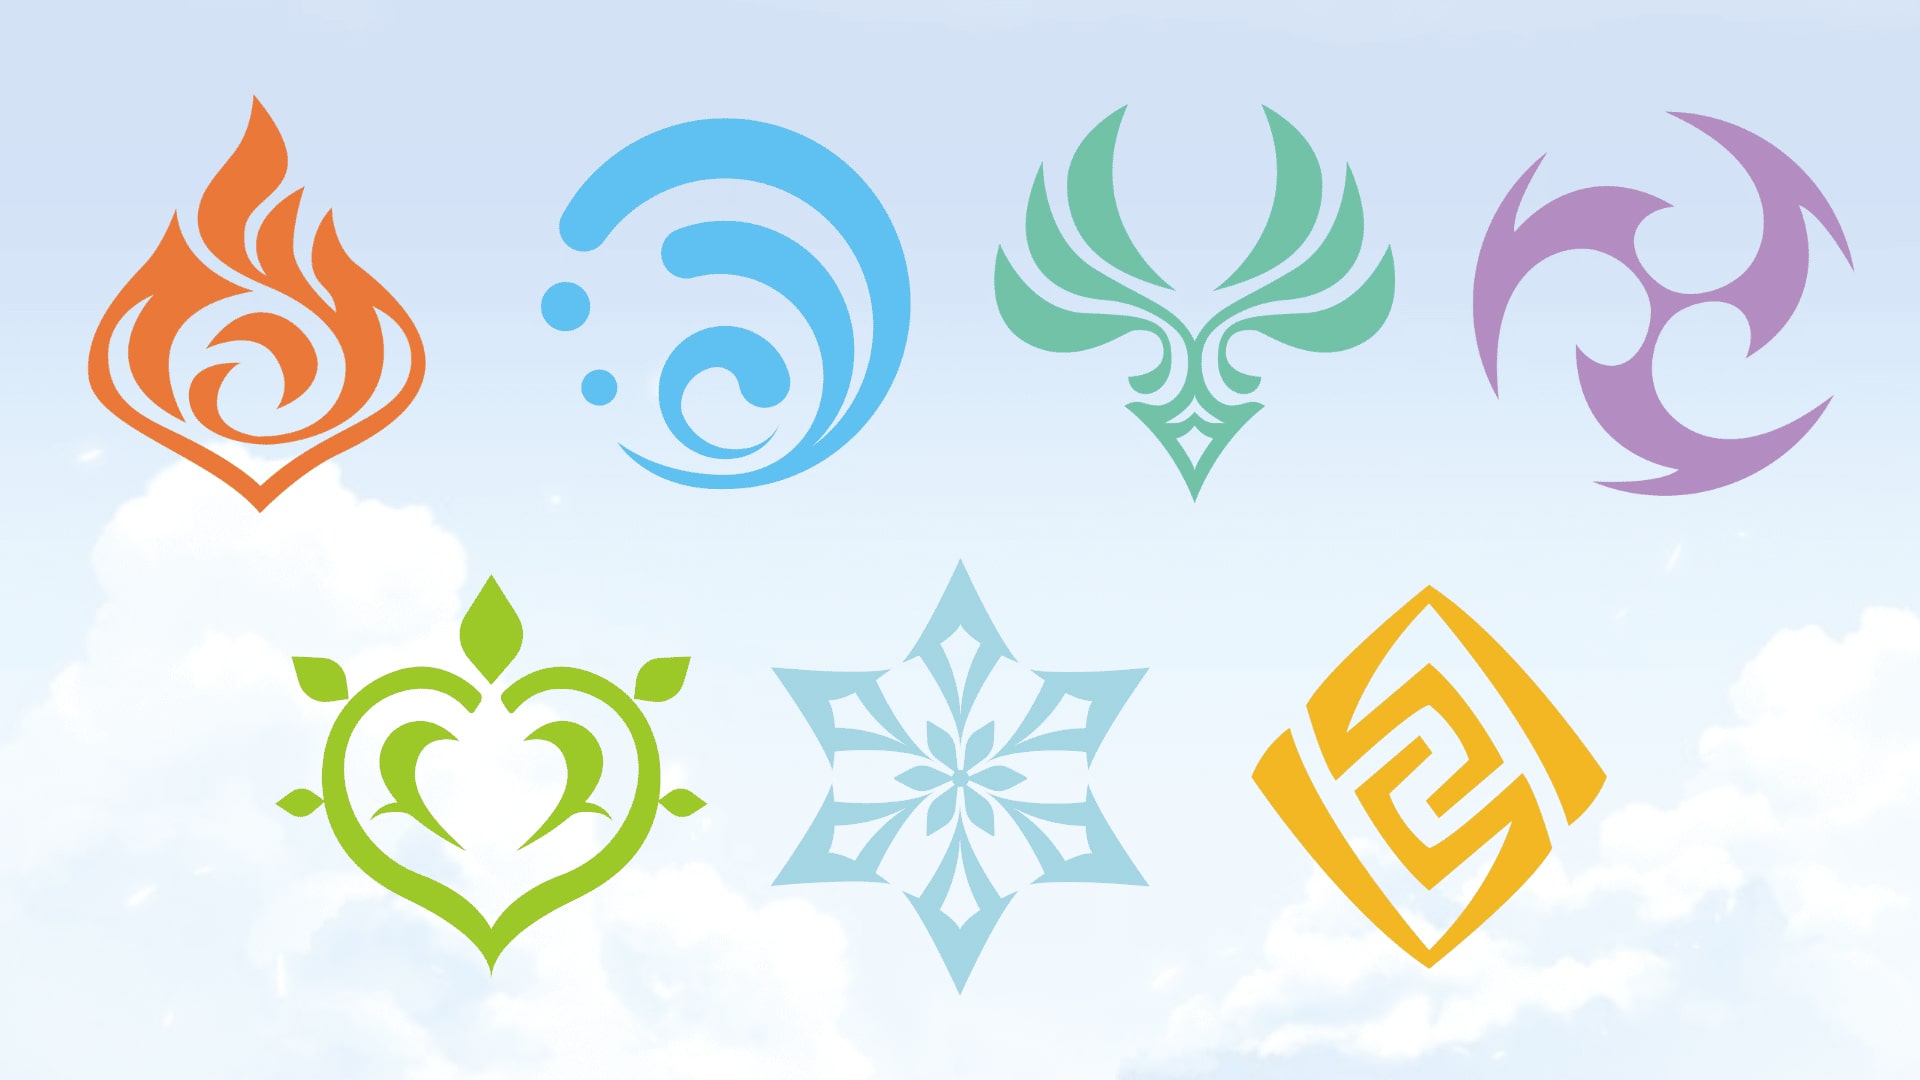 Illustration of various elemental symbols from Genshin Impact